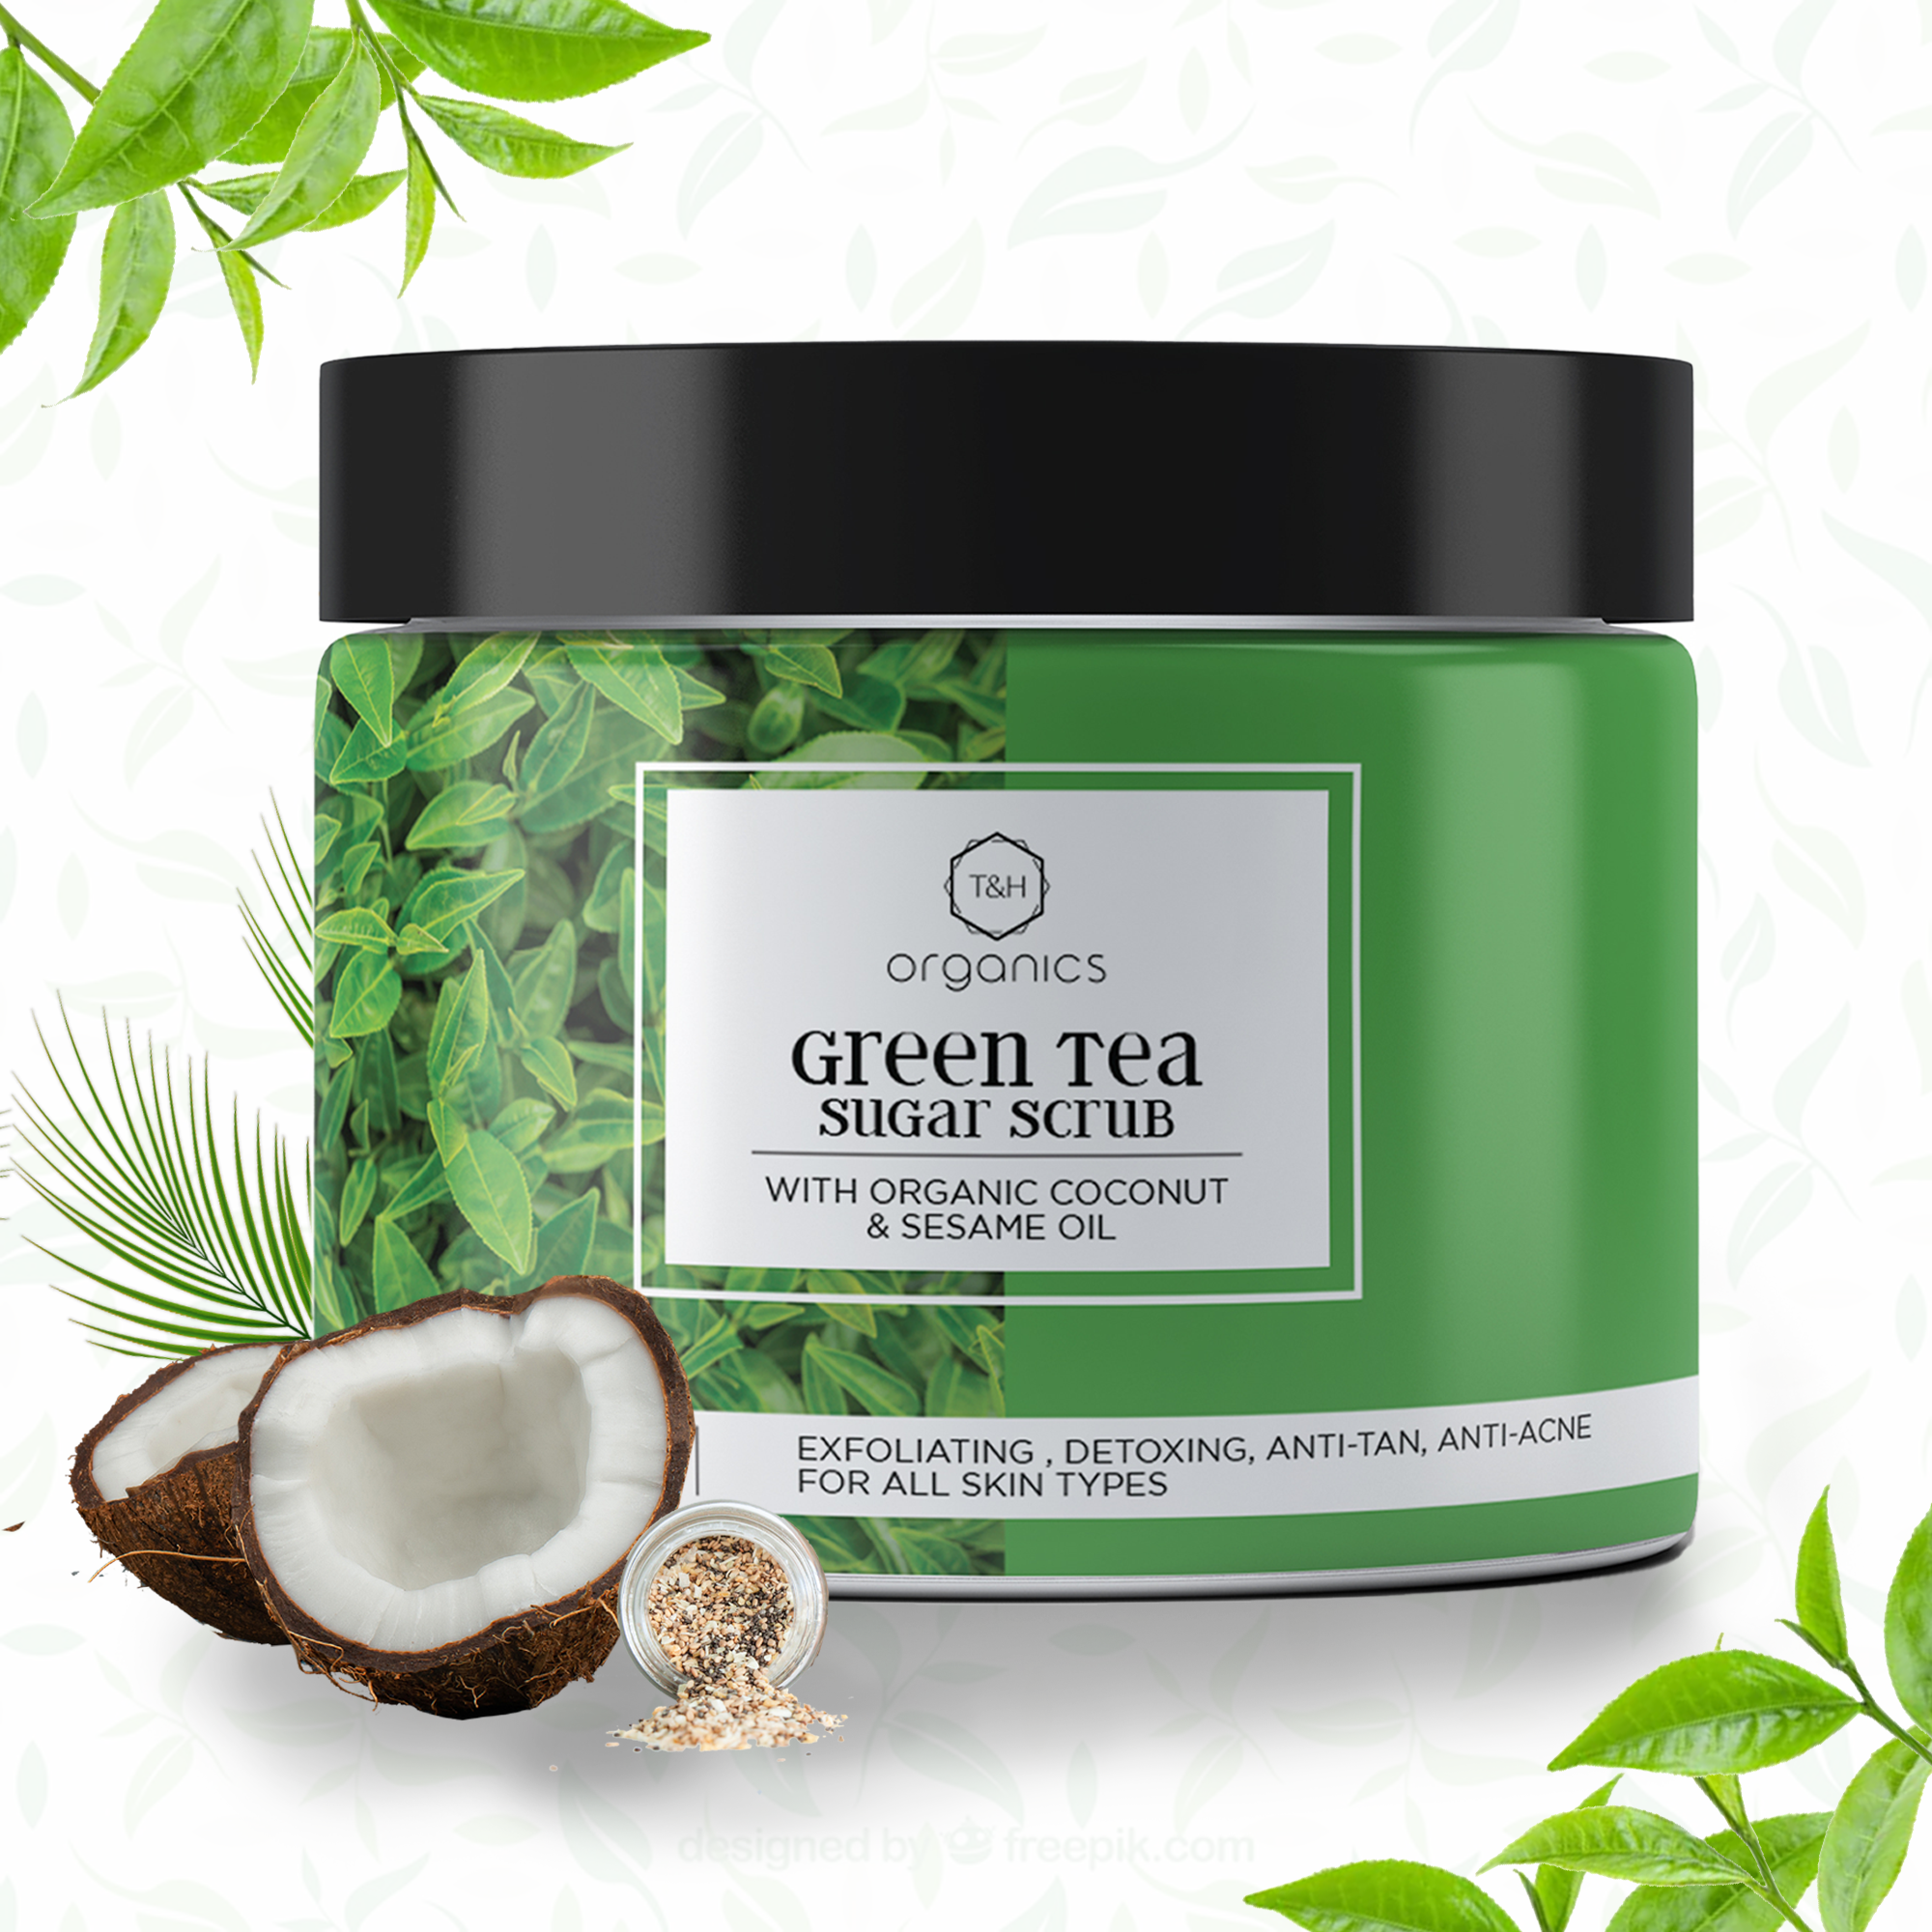 T&H Organics Green Tea Sugar Scrub with Organic Coconut and Sesame oil,100 gm